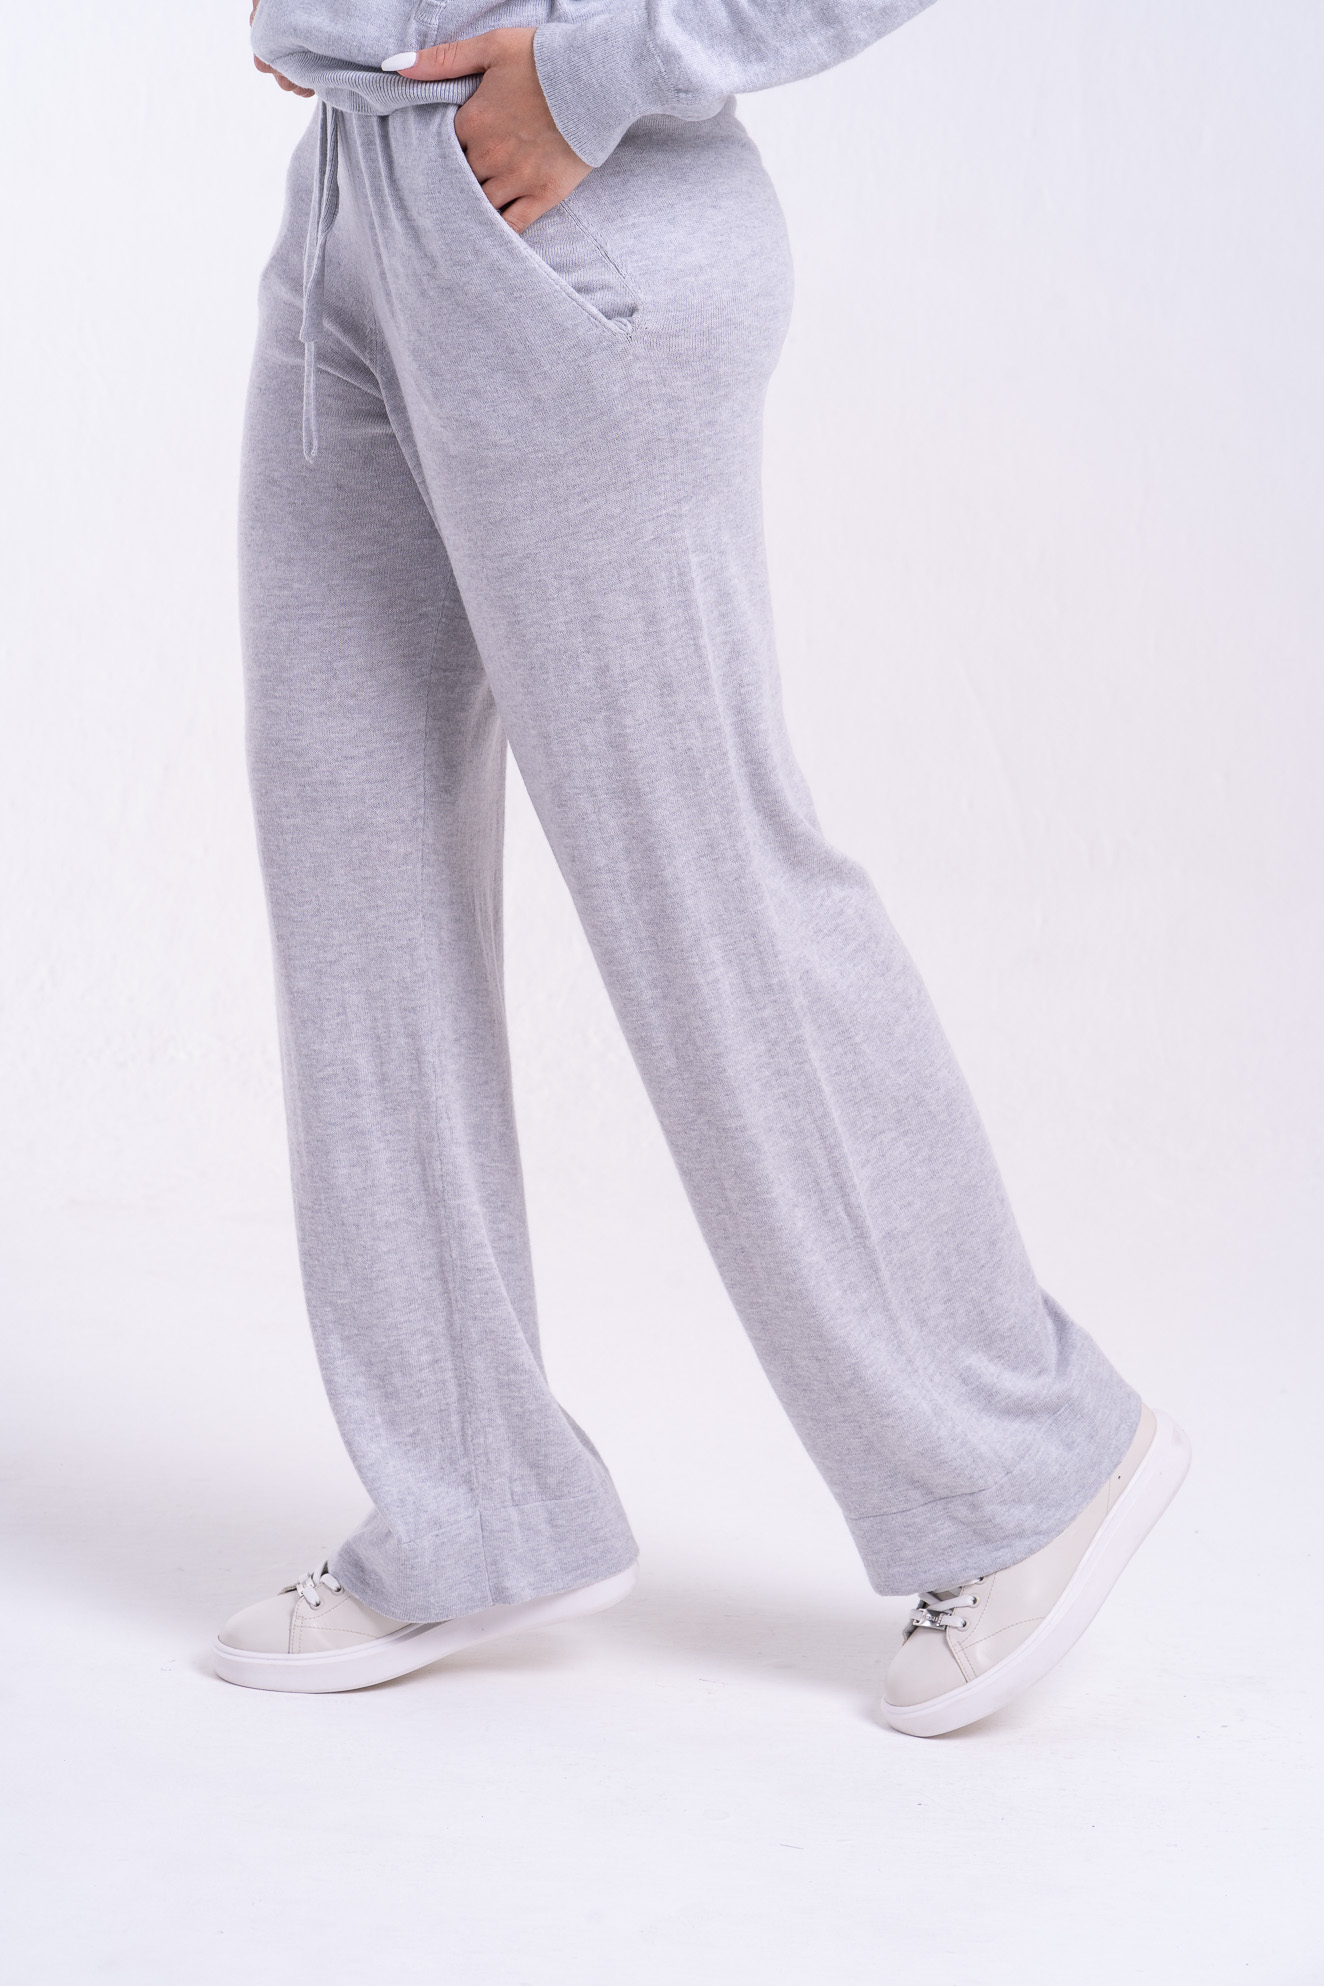 Buy Girls Pink Solid Regular Fit Track Pants Online  715597  Allen Solly